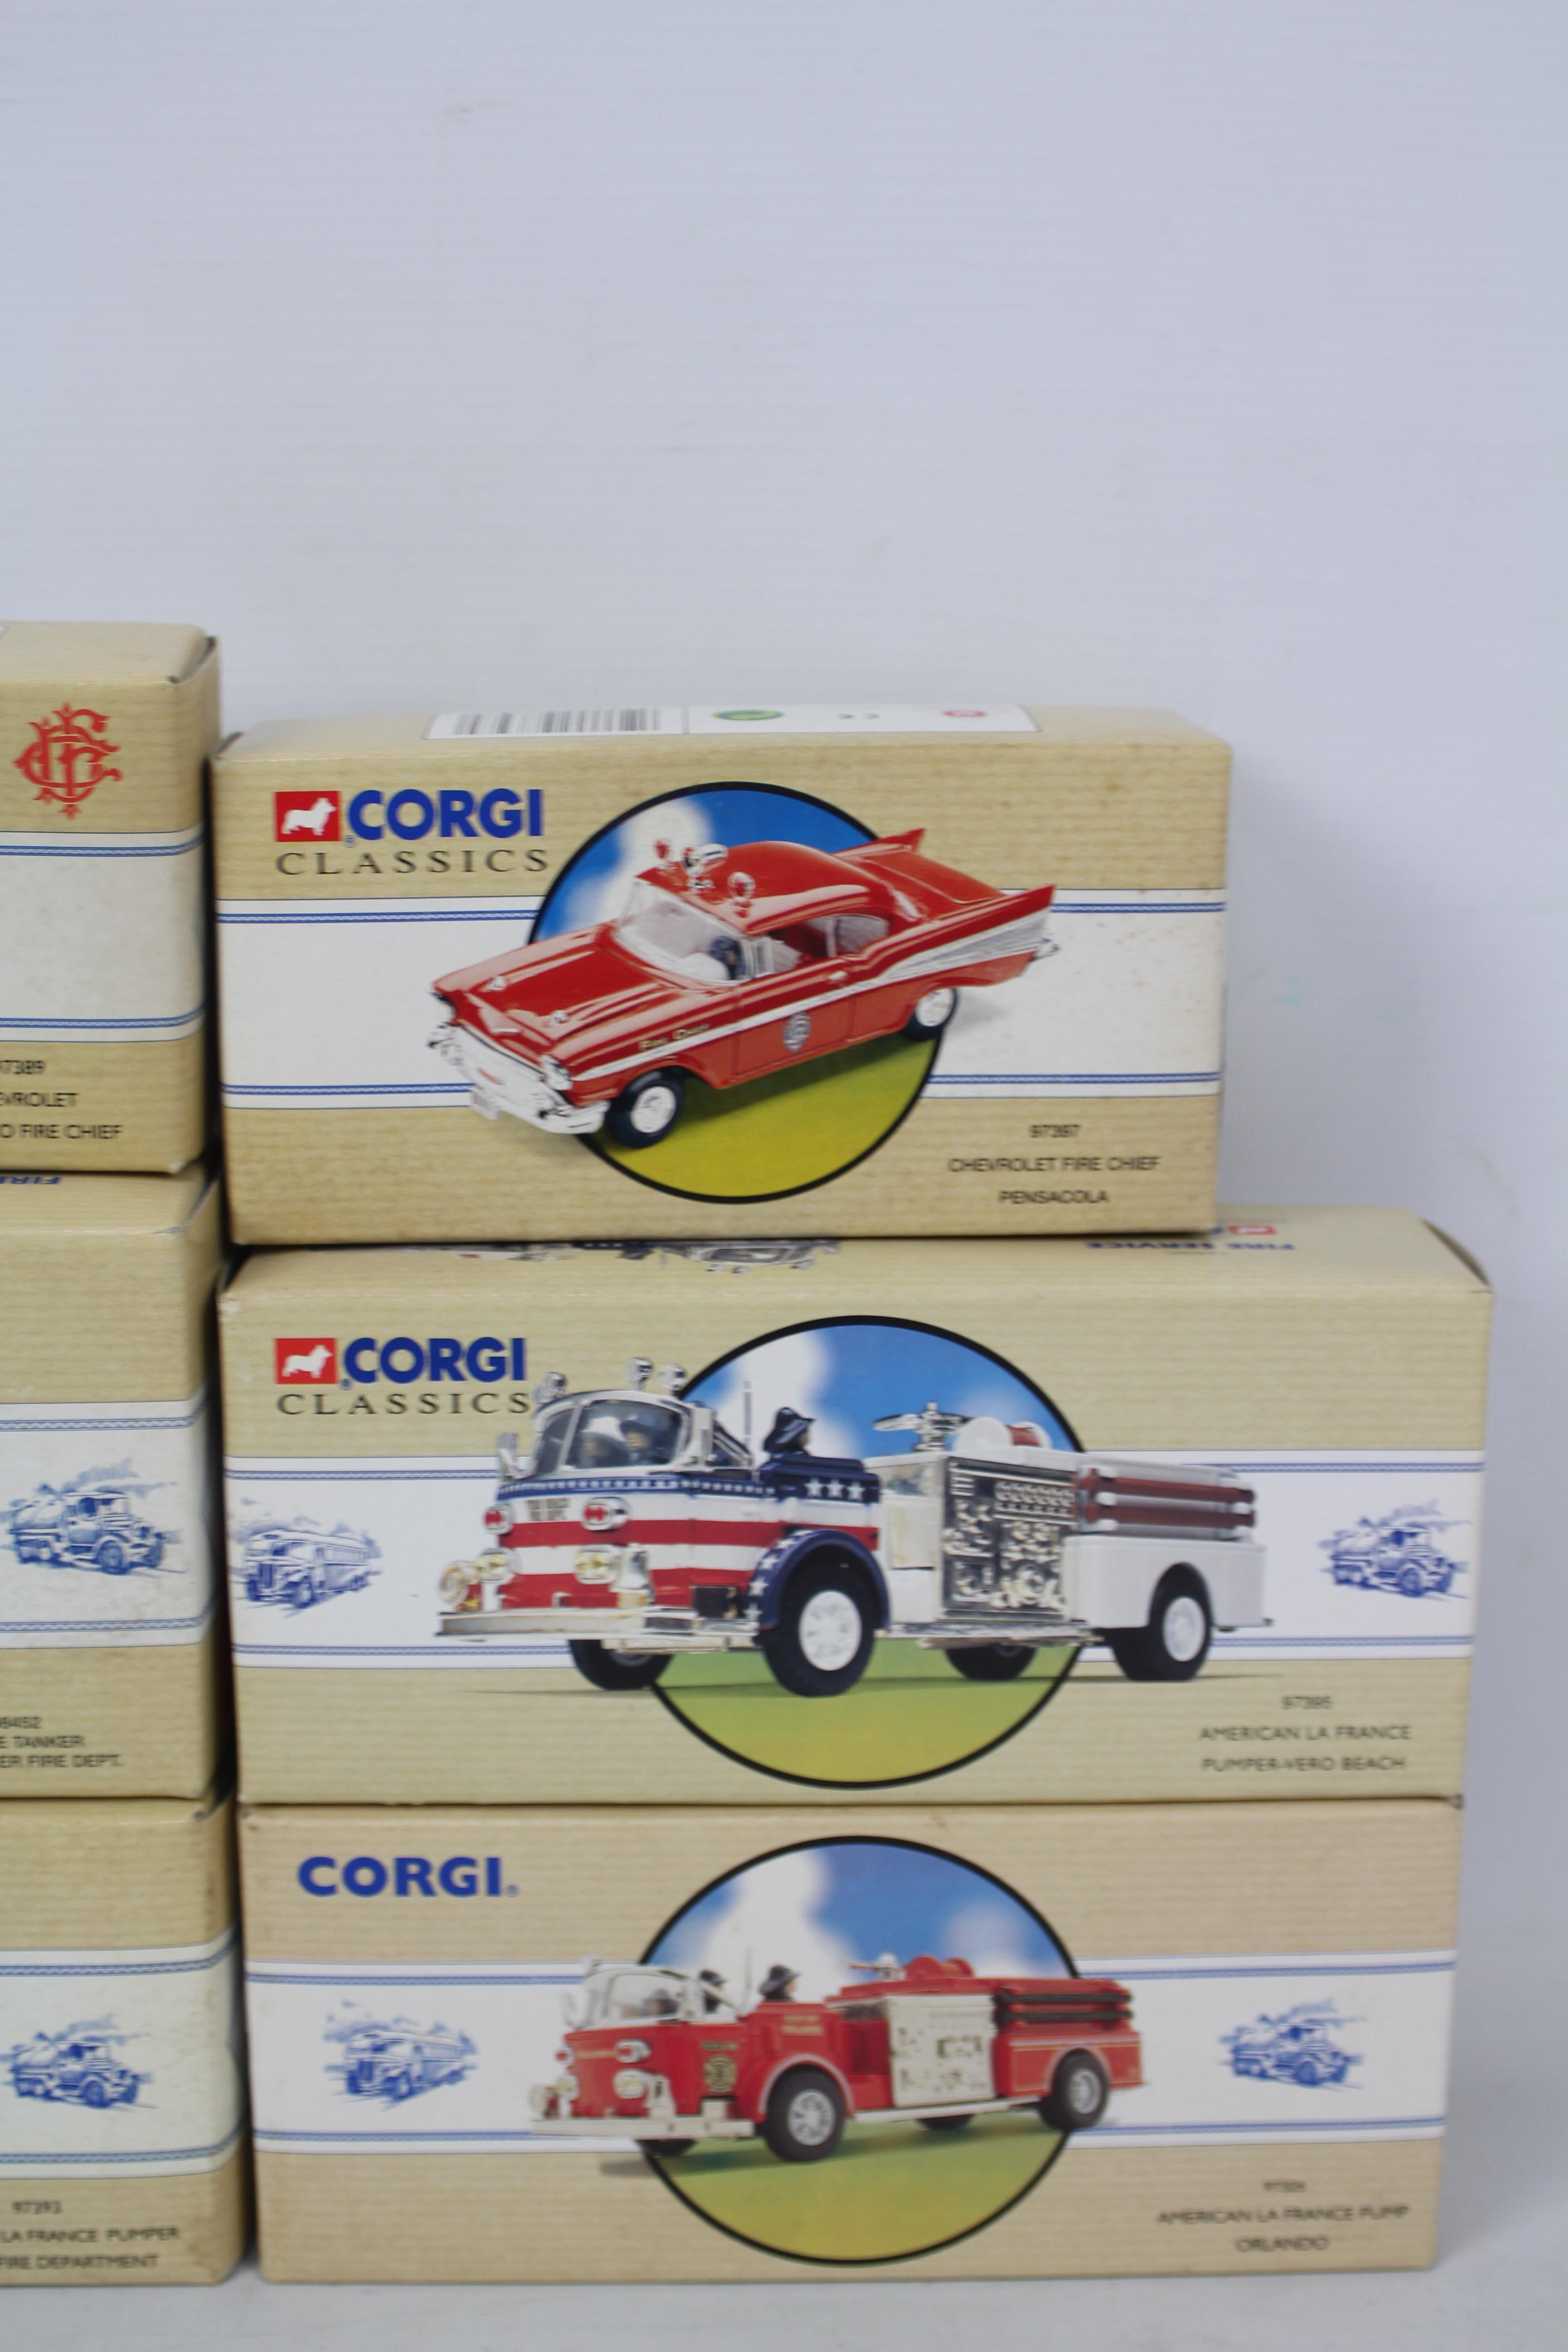 Corgi Classics - Six boxed diecast US Fire Appliances / vehicles from Corgi. - Image 3 of 4